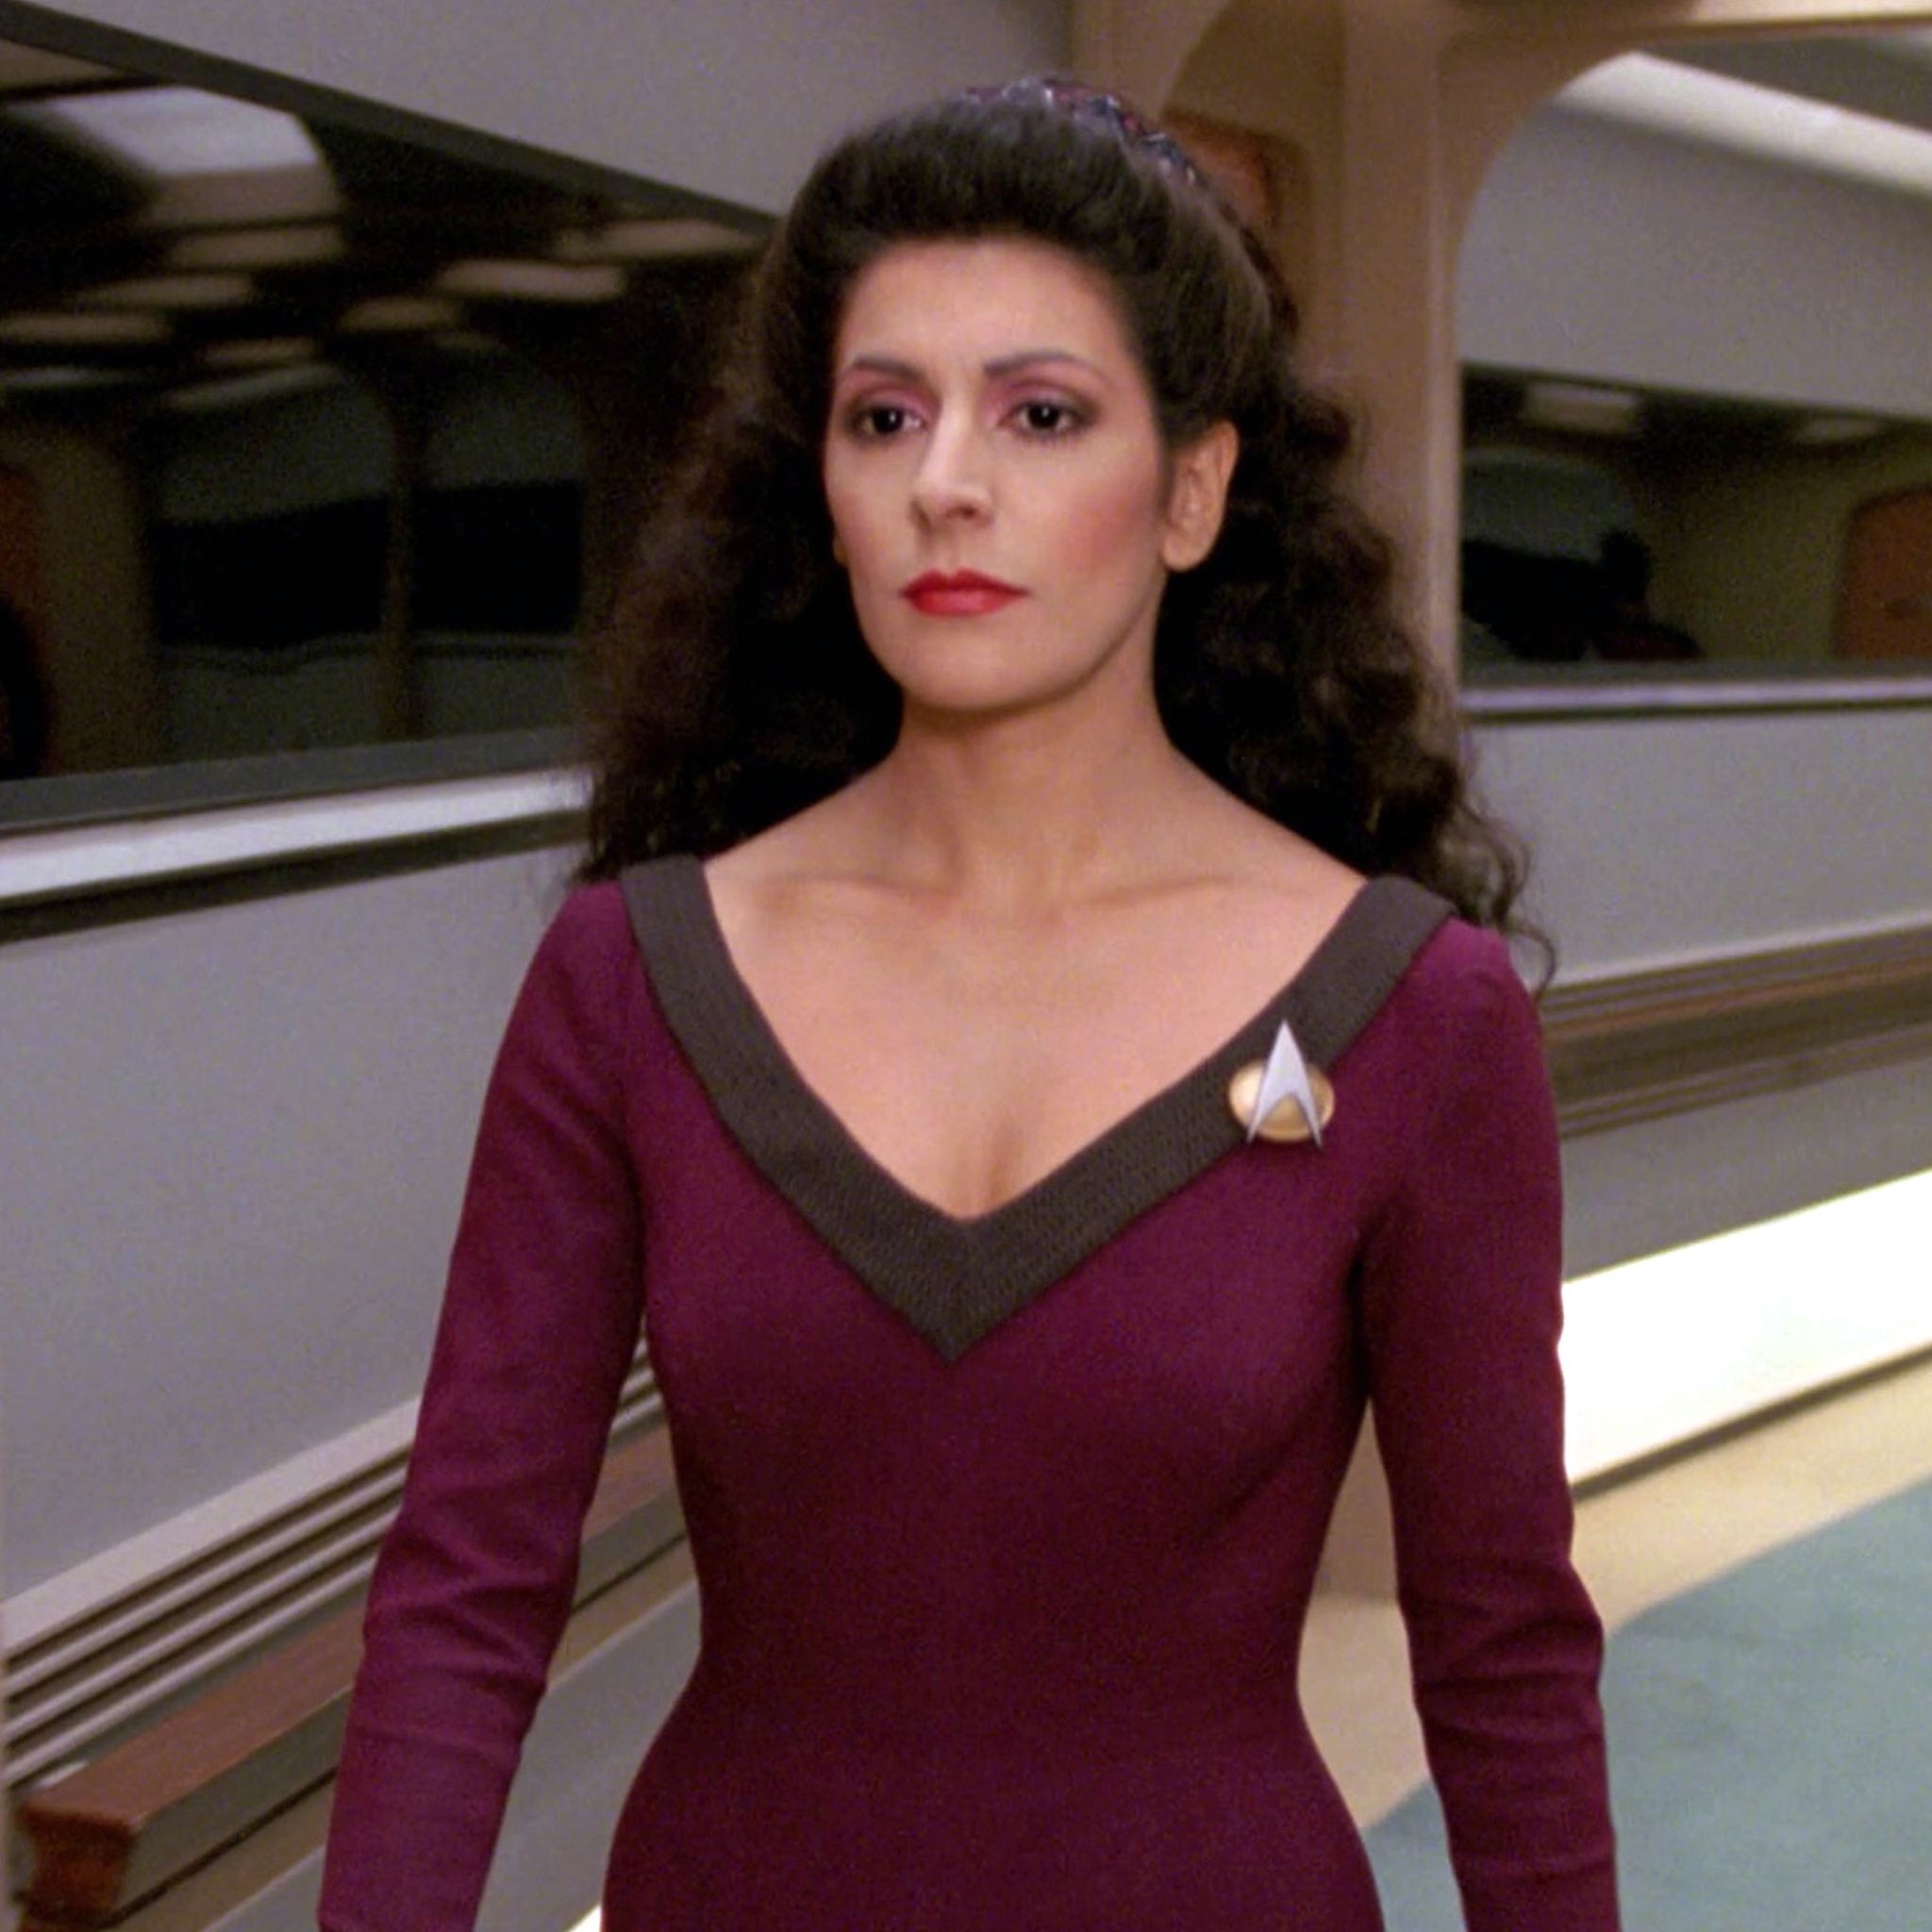 Marina Sirtis as Counselor Deanna Troi in Star Trek The Next Generation